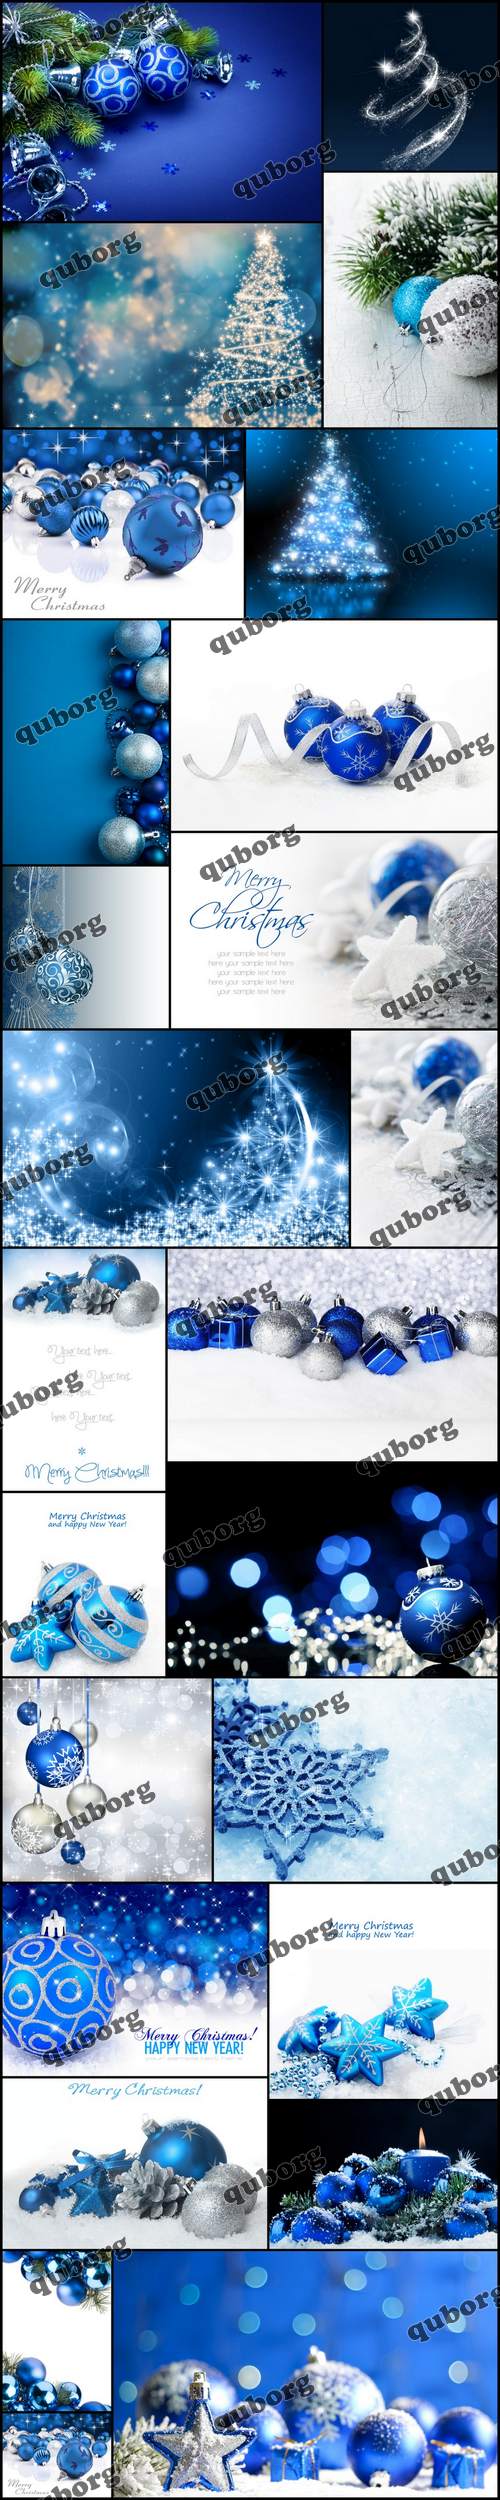 Stock Photos - Blue Christmas Backgrounds 2